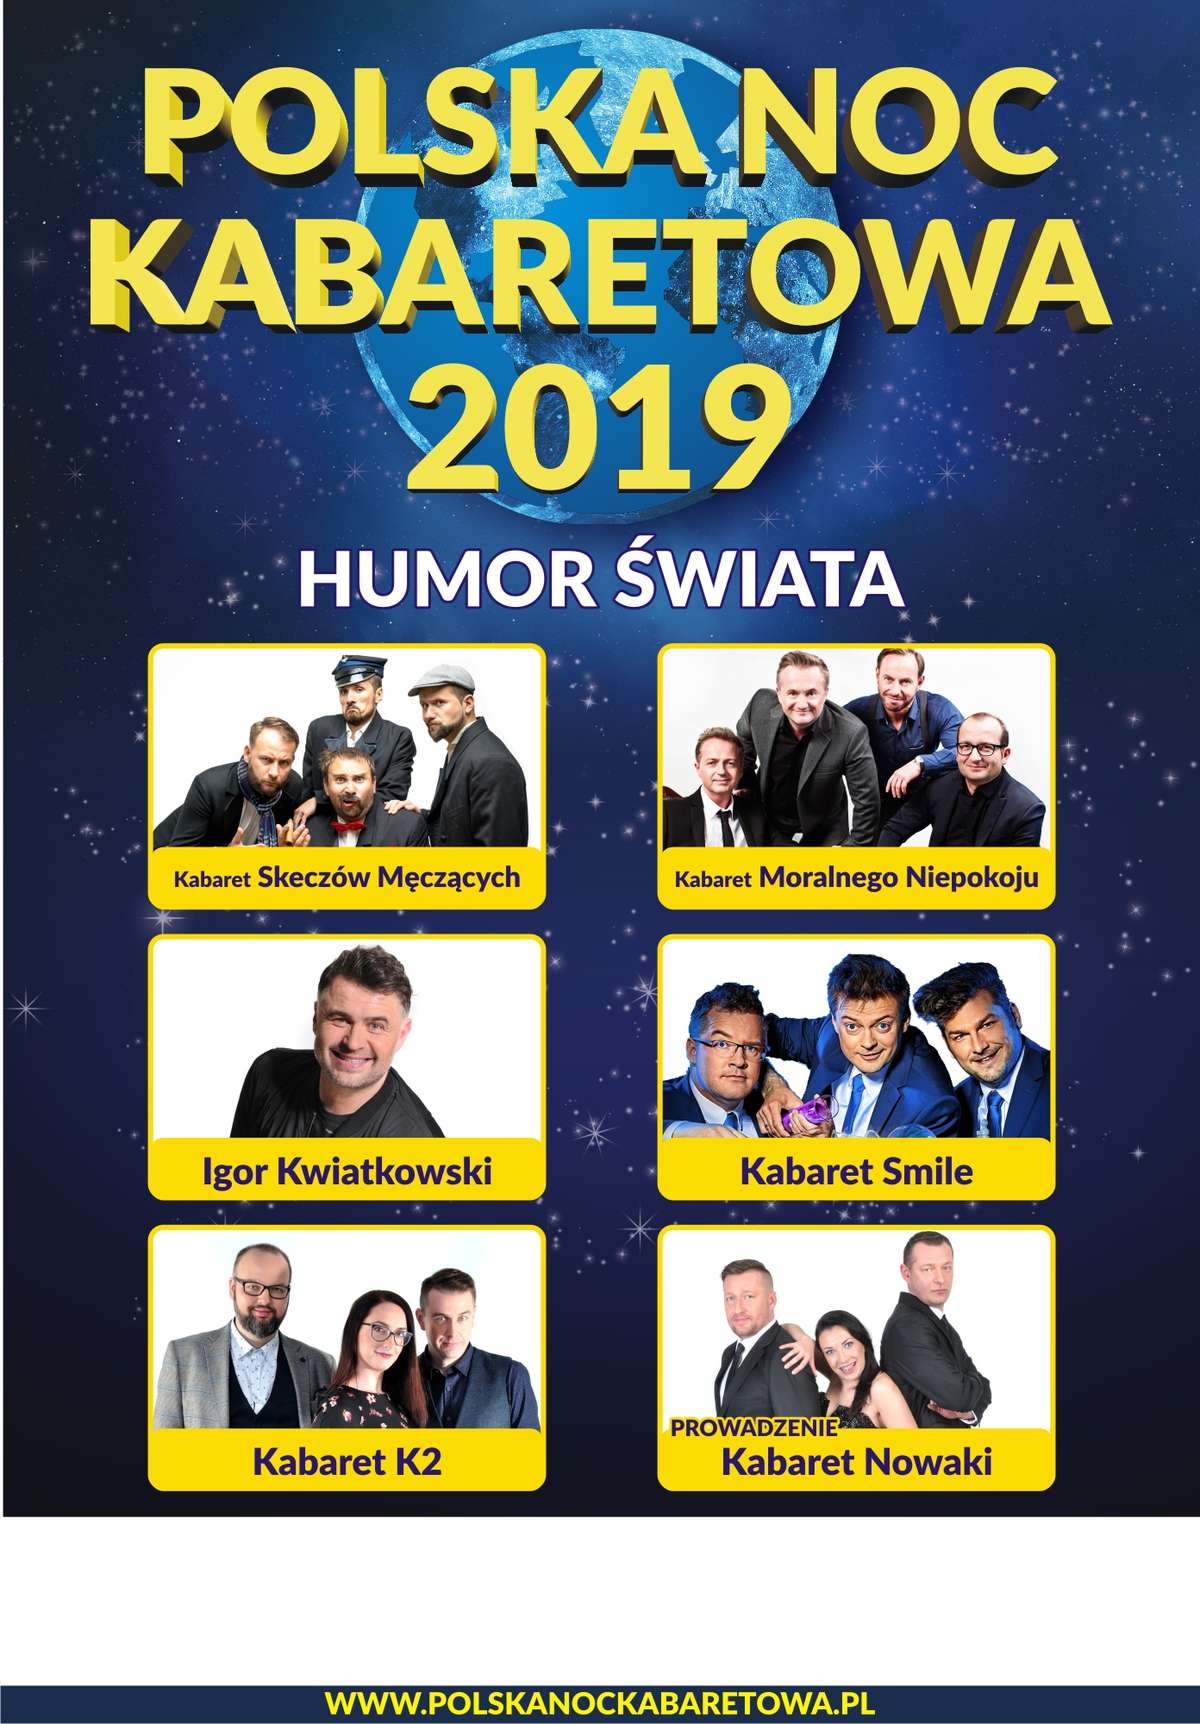 Polska Noc Kabaretowa 2019 - Humor świata - full image